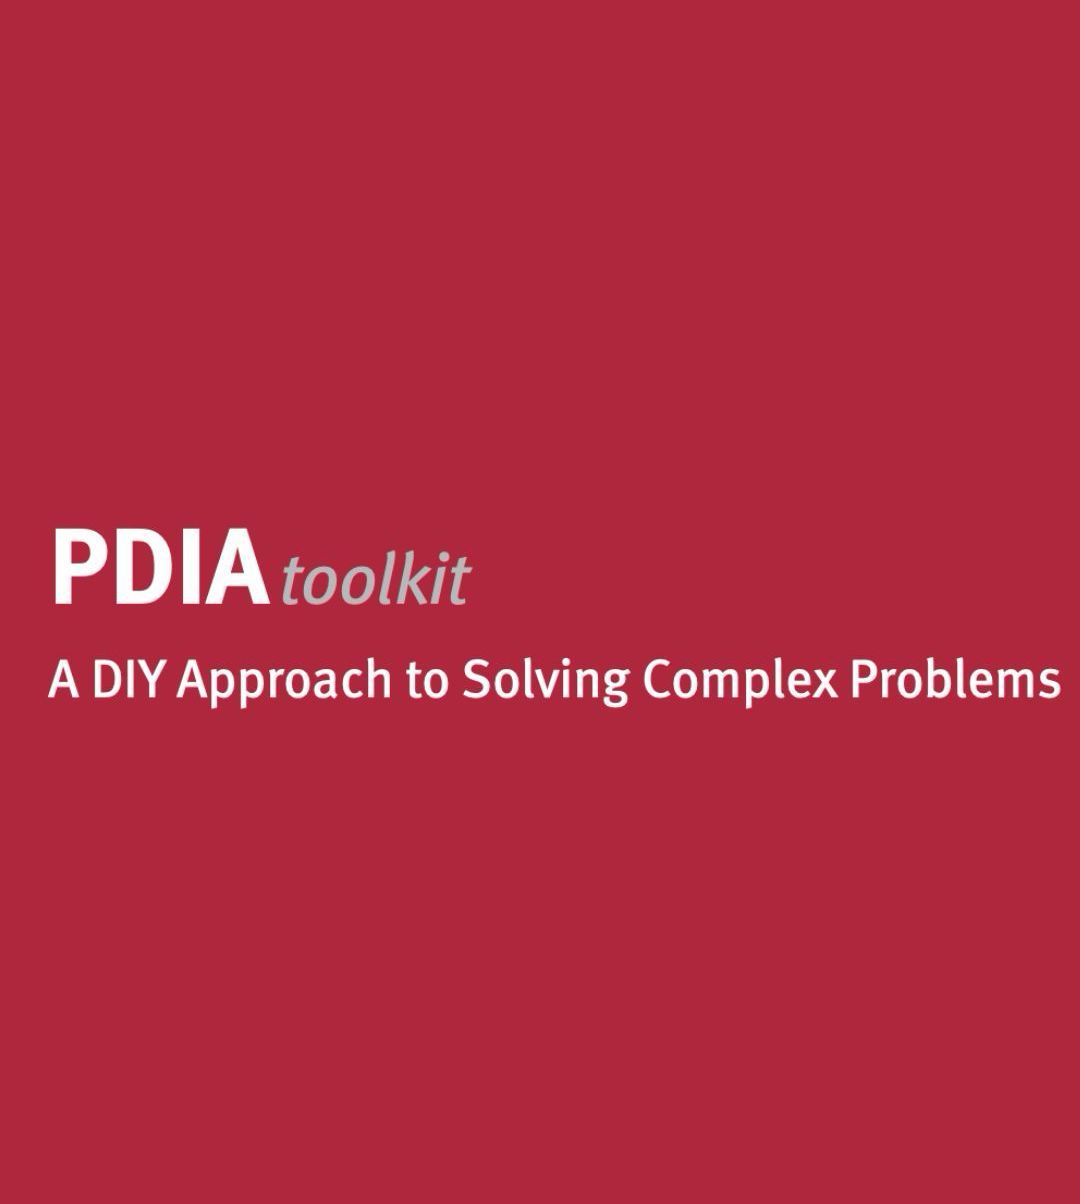 PDIA Toolkit